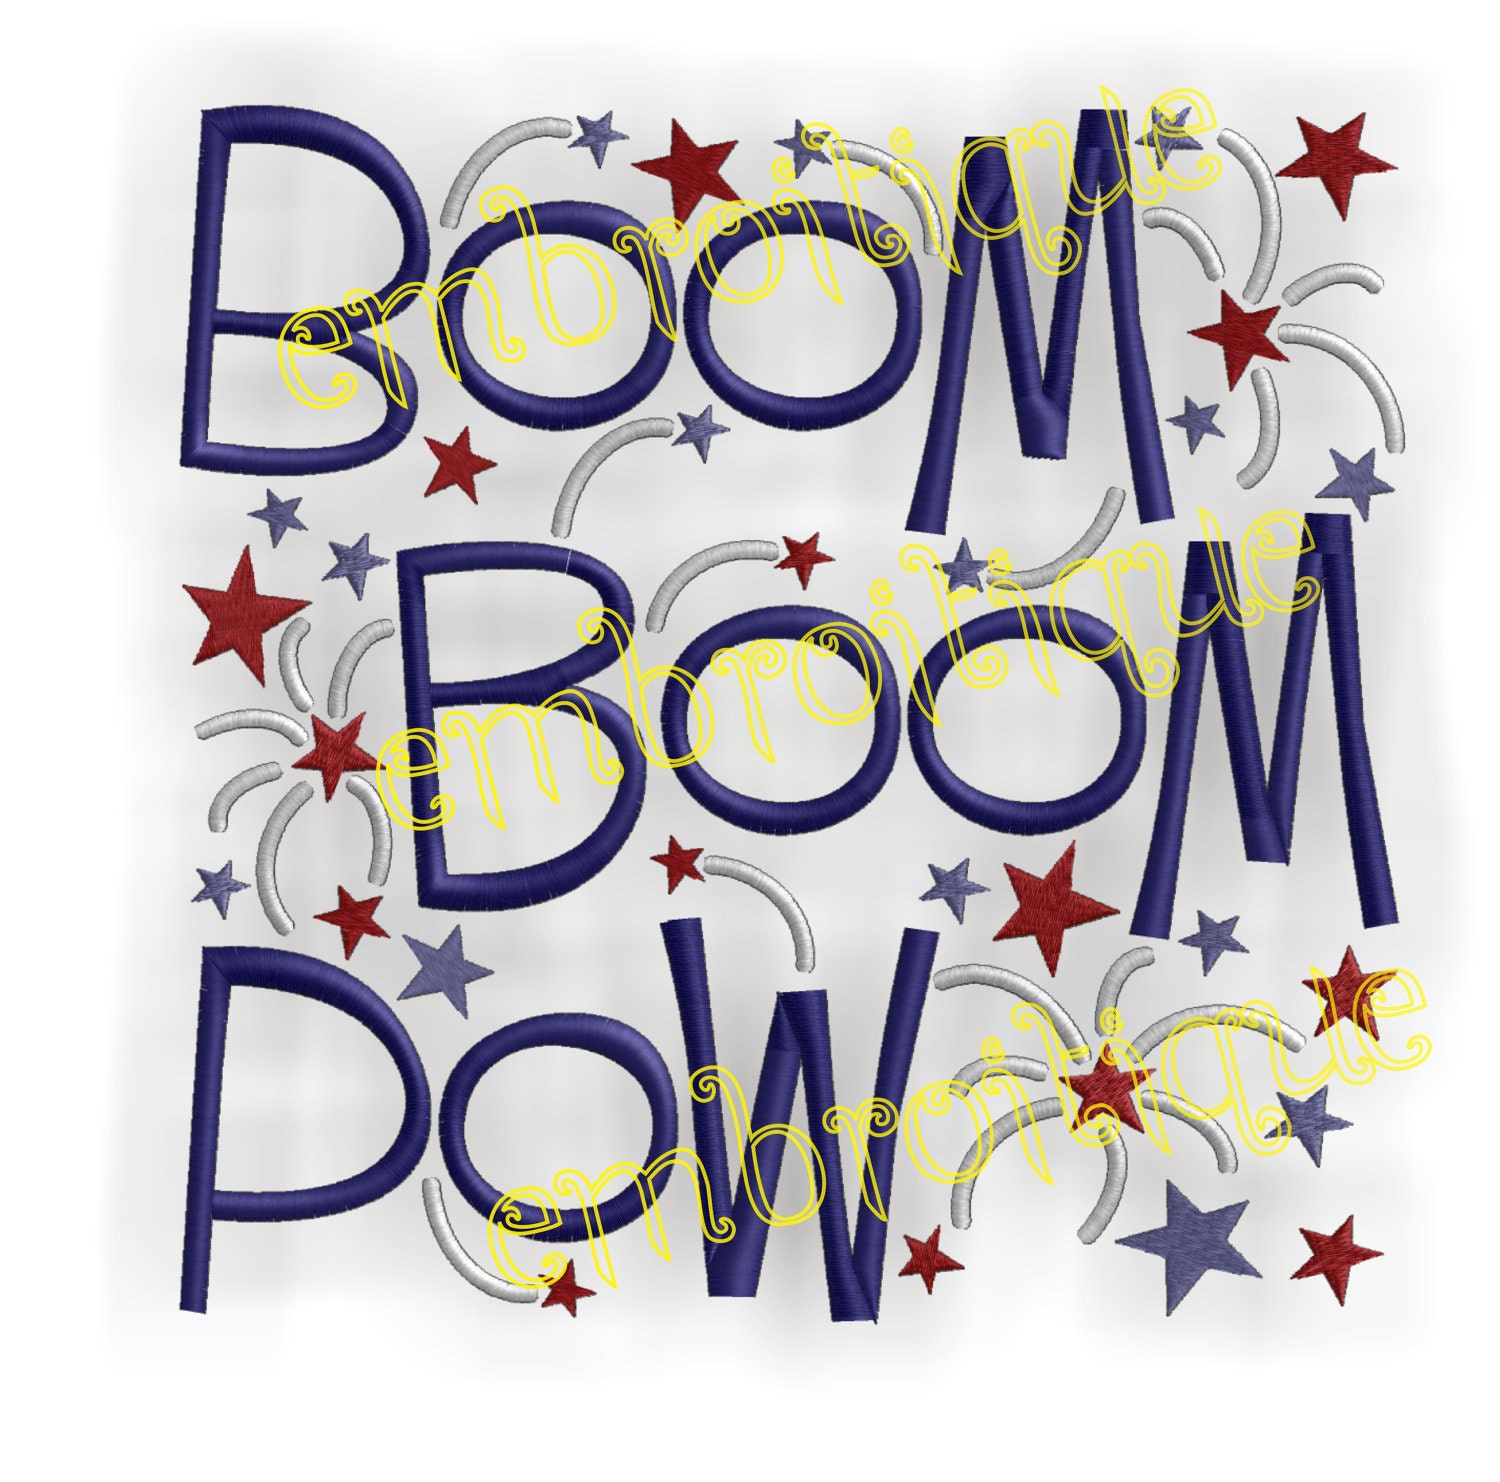 boom boom boom pow